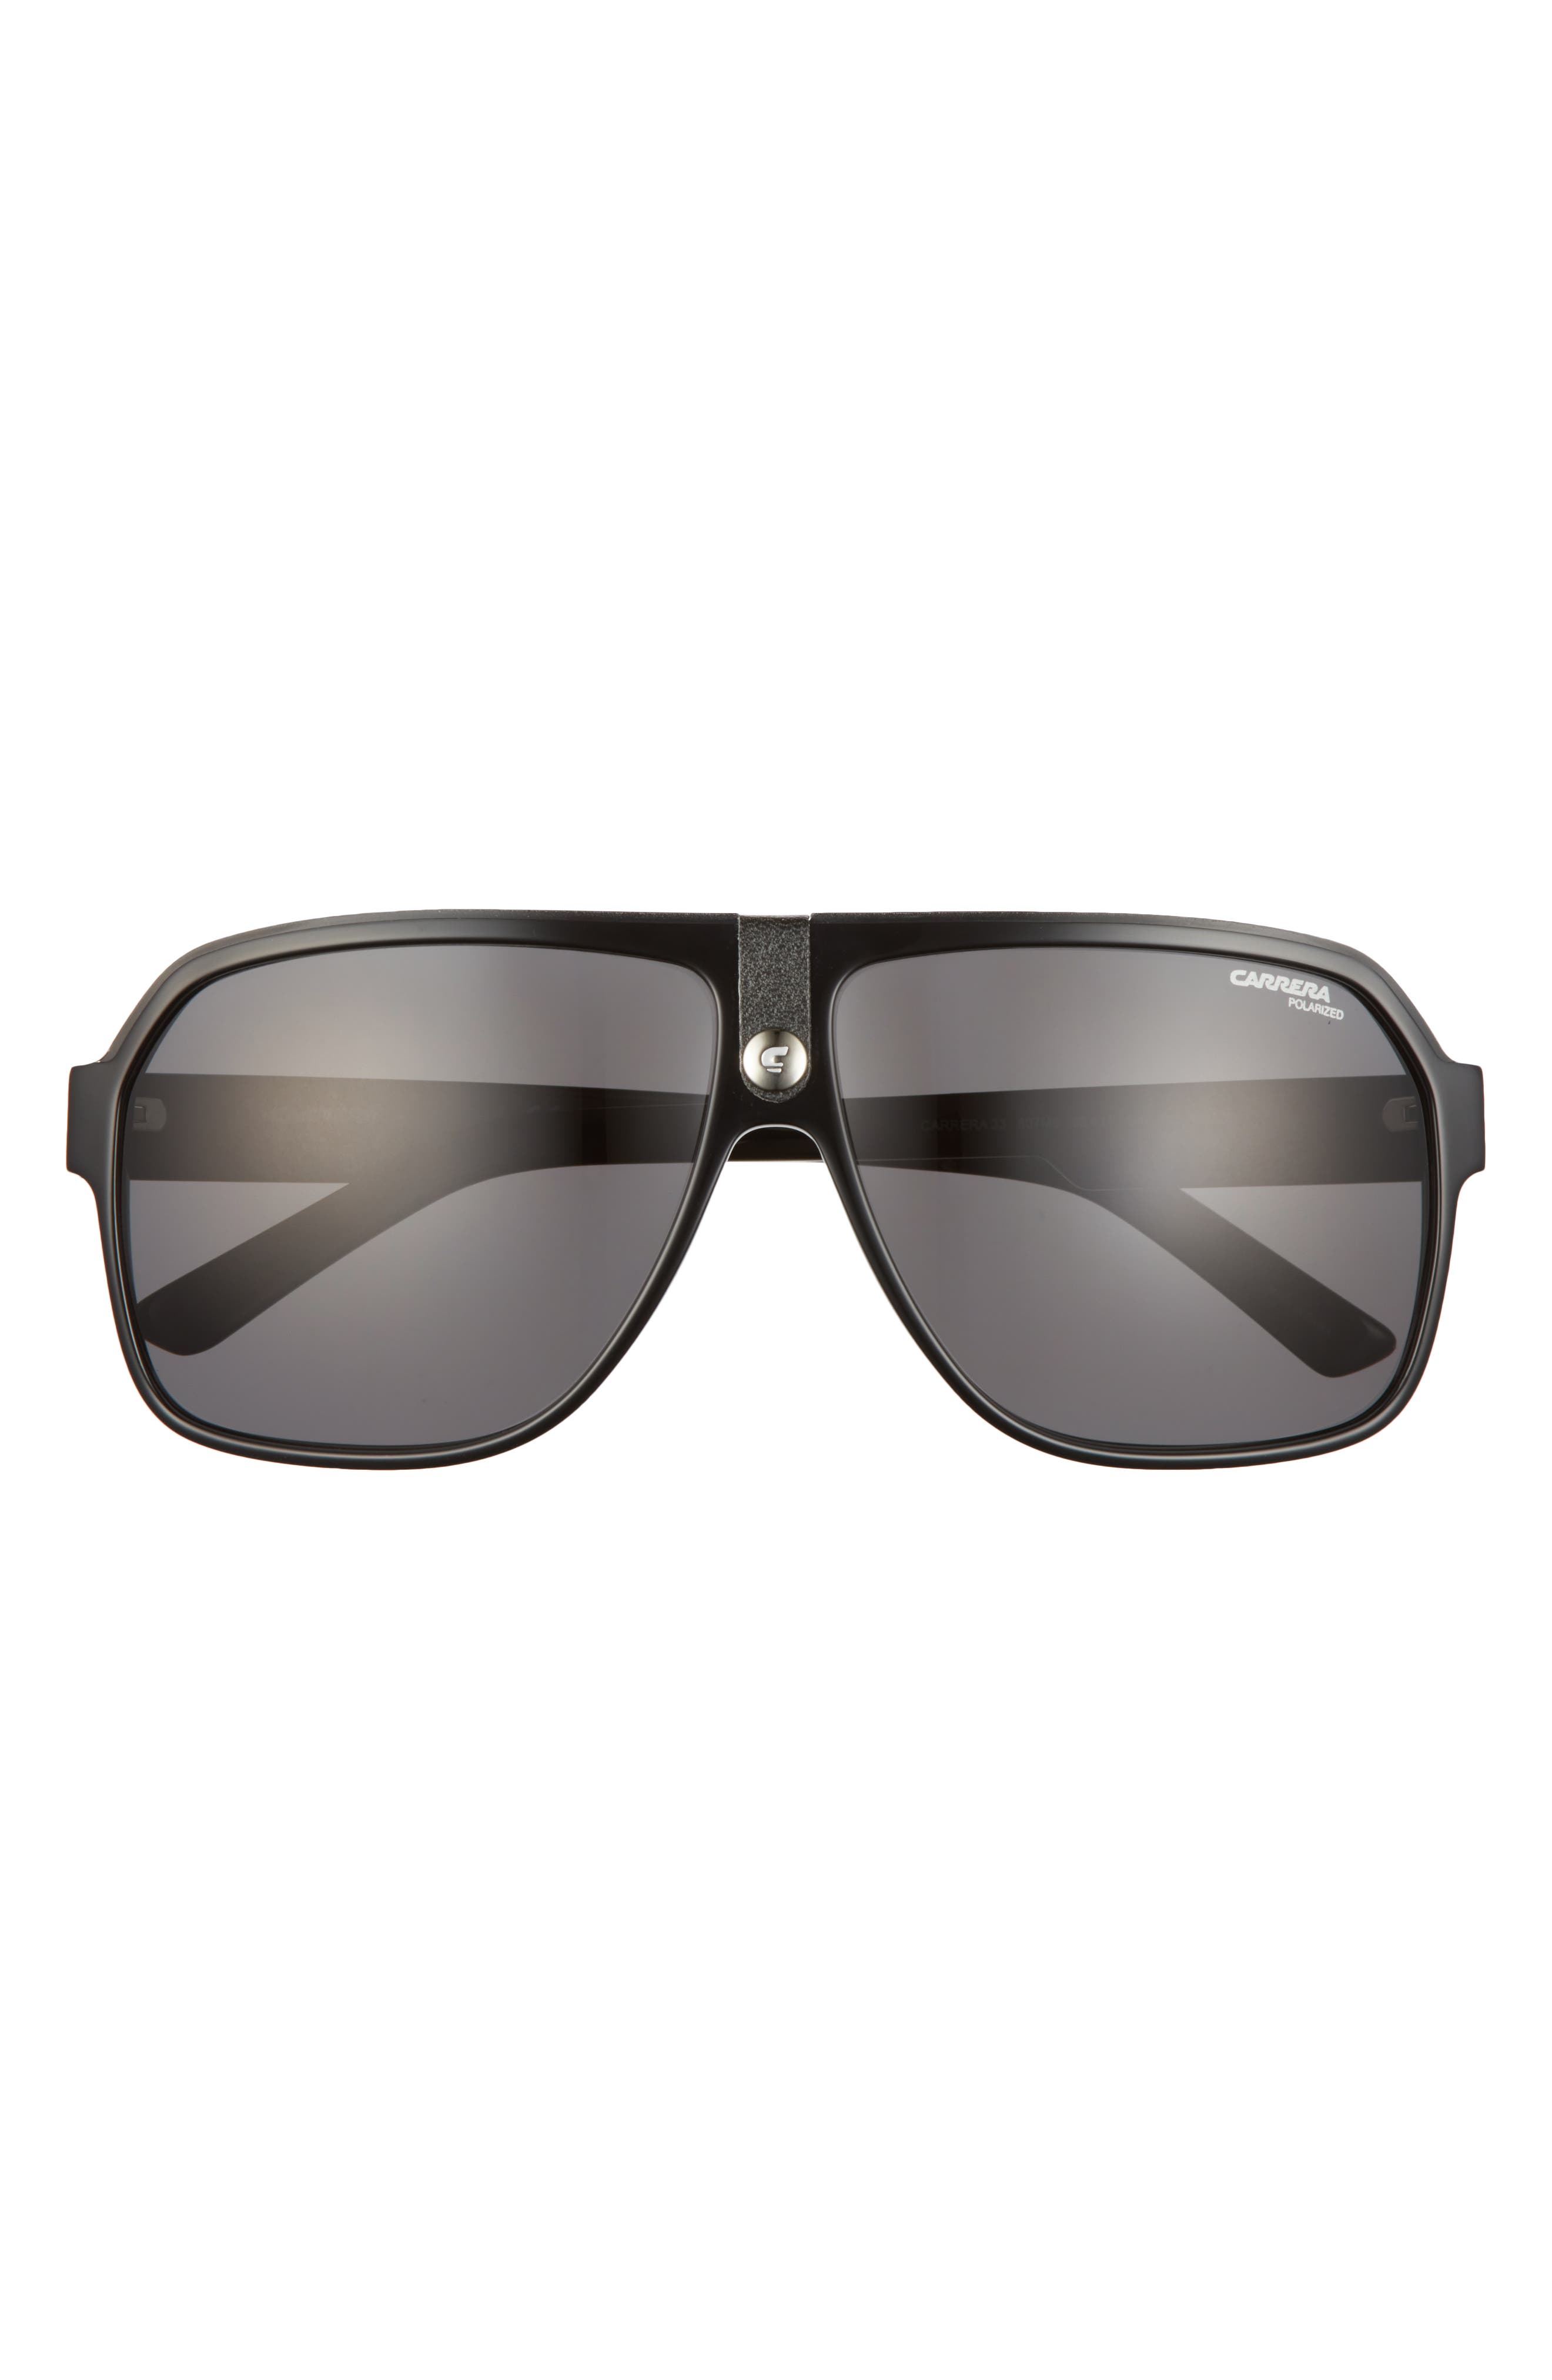 2020 Unisex Carrera Glasses Fashion Eyewear Aviator Men & Women Sunglasses YJC 